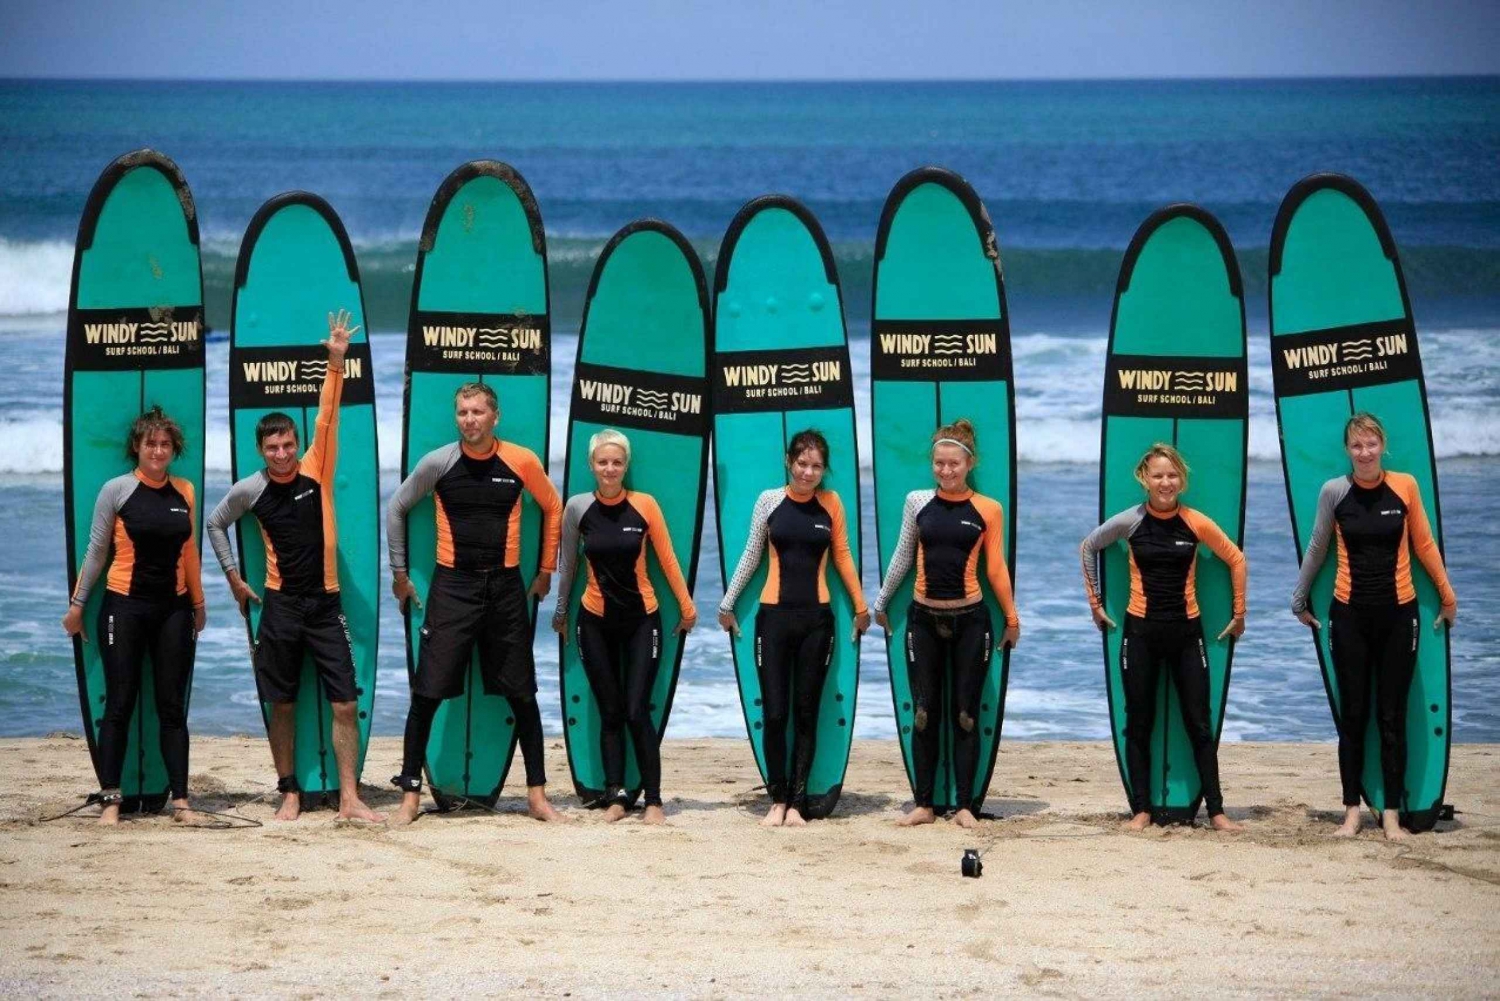 Praia de Kuta, Bali: Aulas de surfe para iniciantes e intermediários